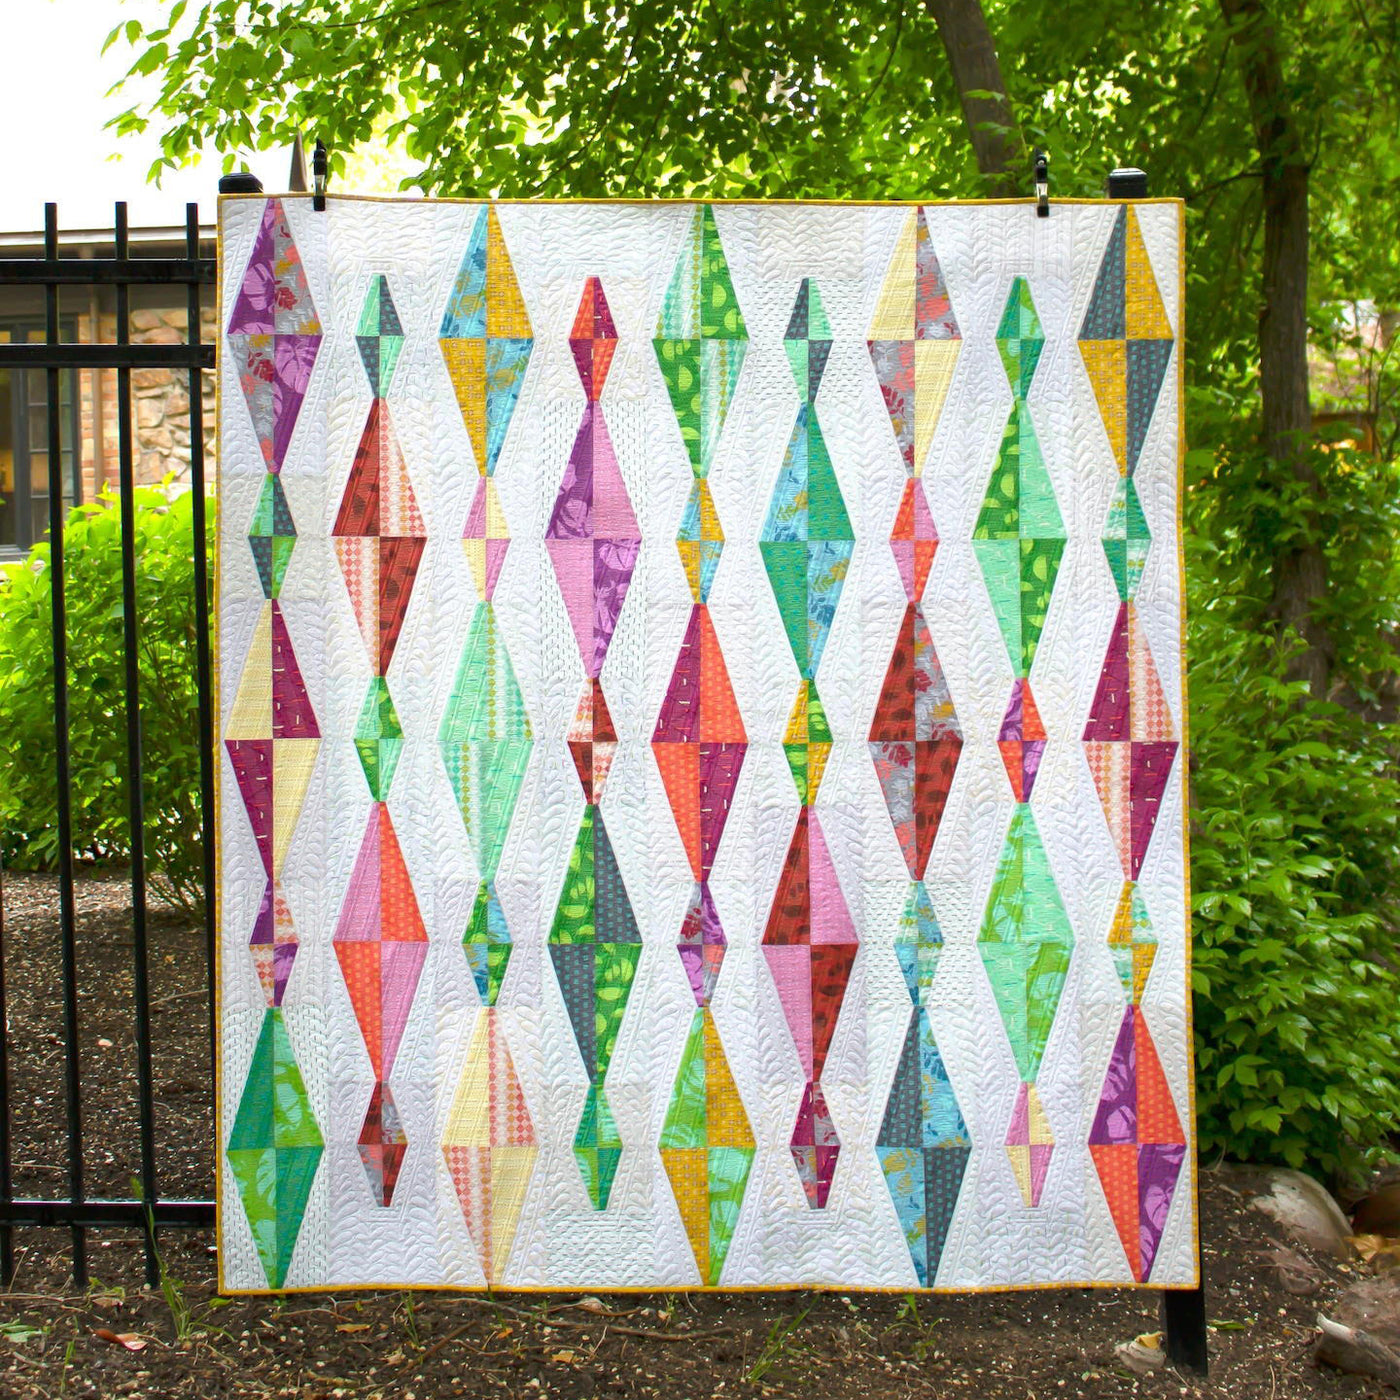 Diamond Daze Quilt Pattern by Sew Kind of Wonderful